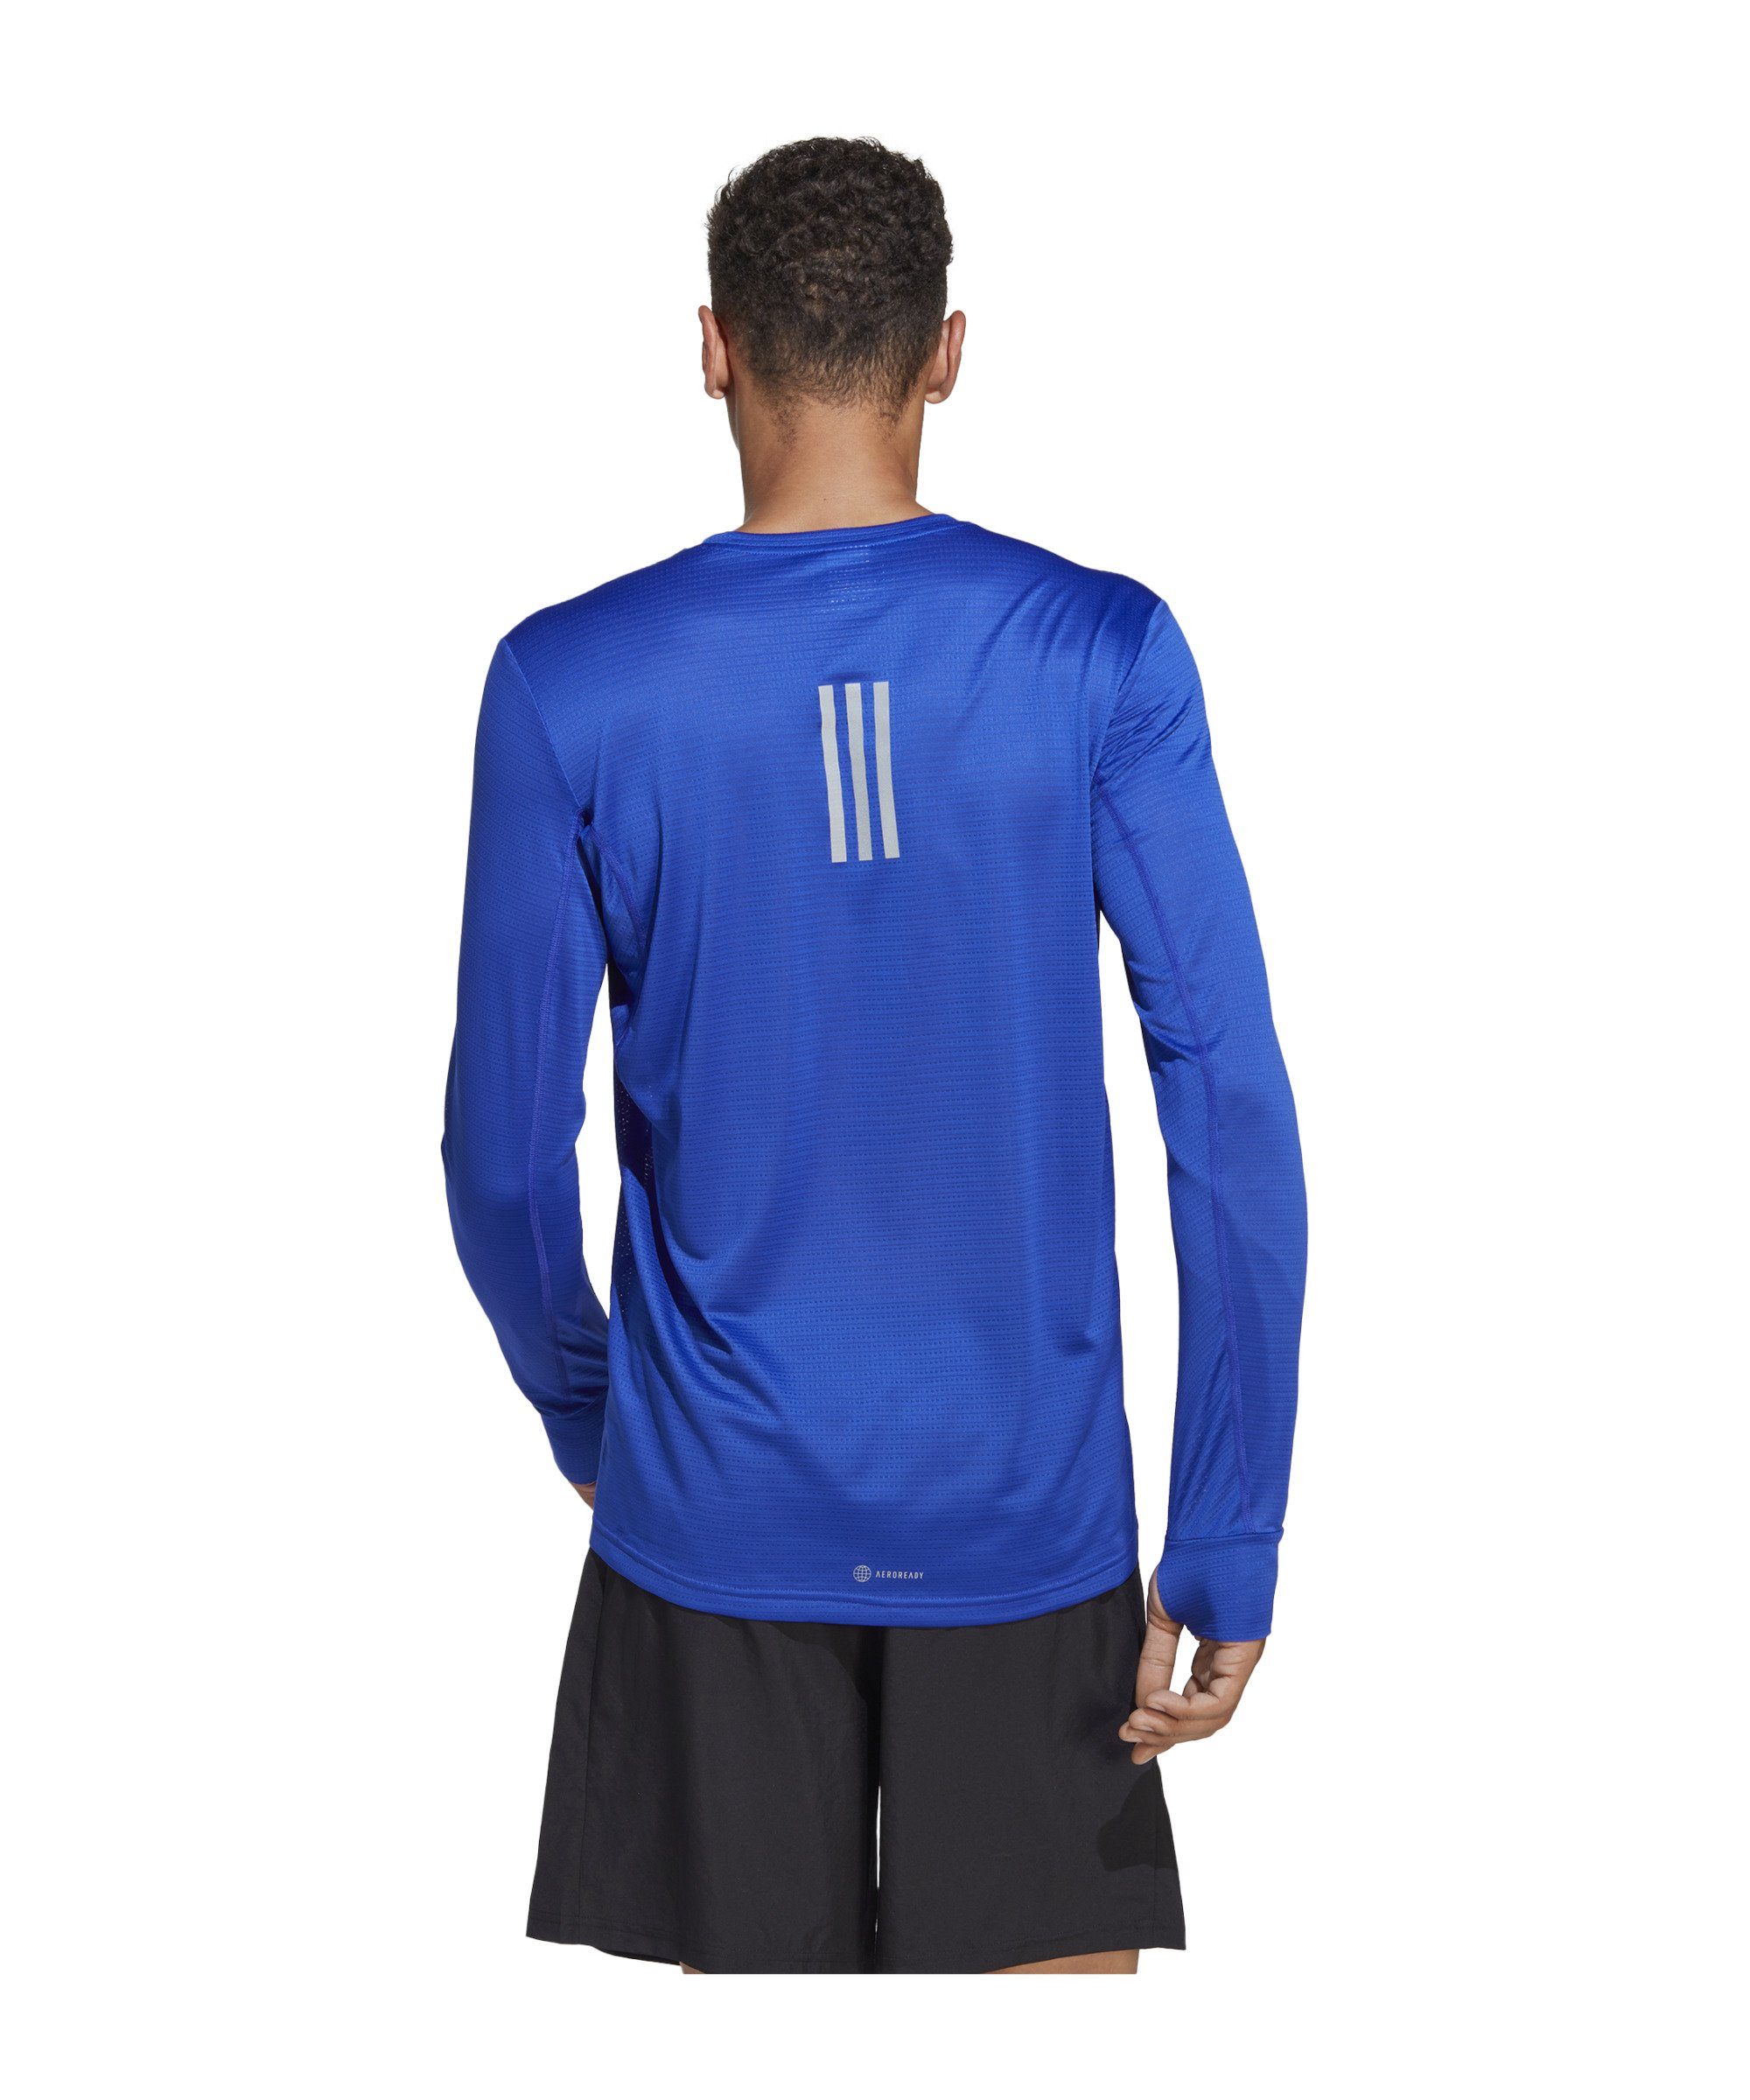 adidas Performance Lauftop Own the Run default blau Sweatshirt